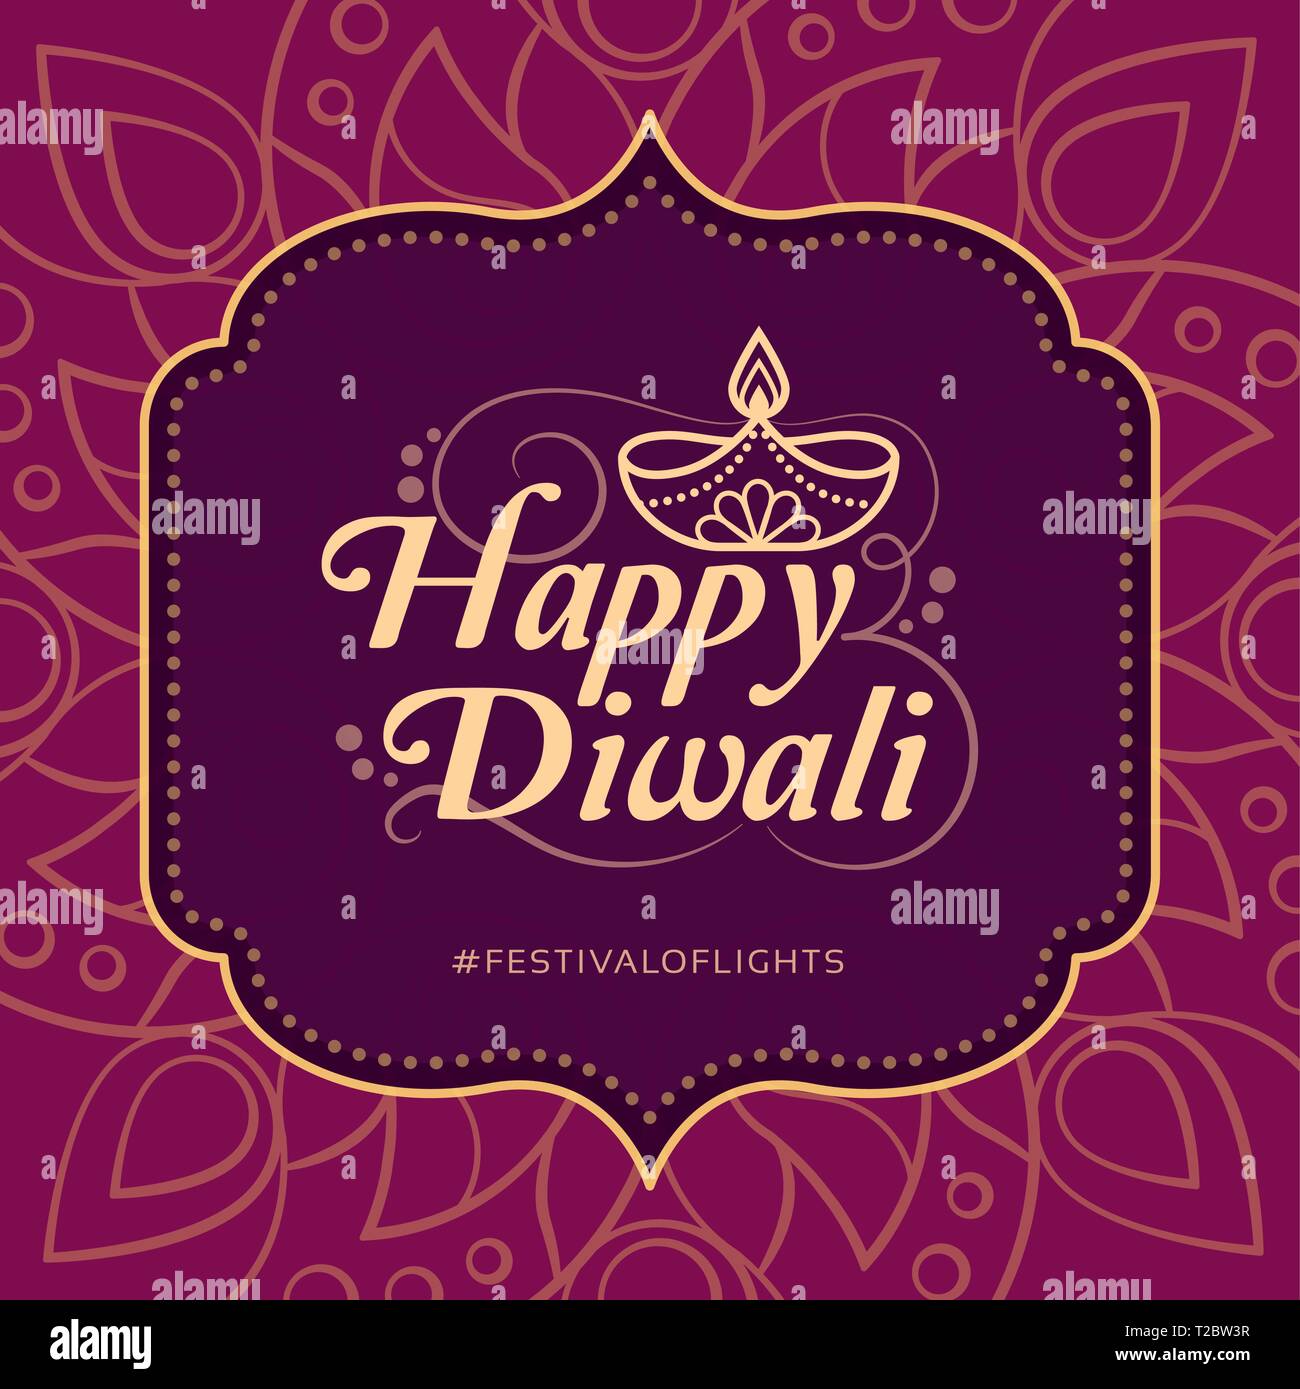 Happy Diwali feier Karte und social media Post mit diya Lampe Stock Vektor